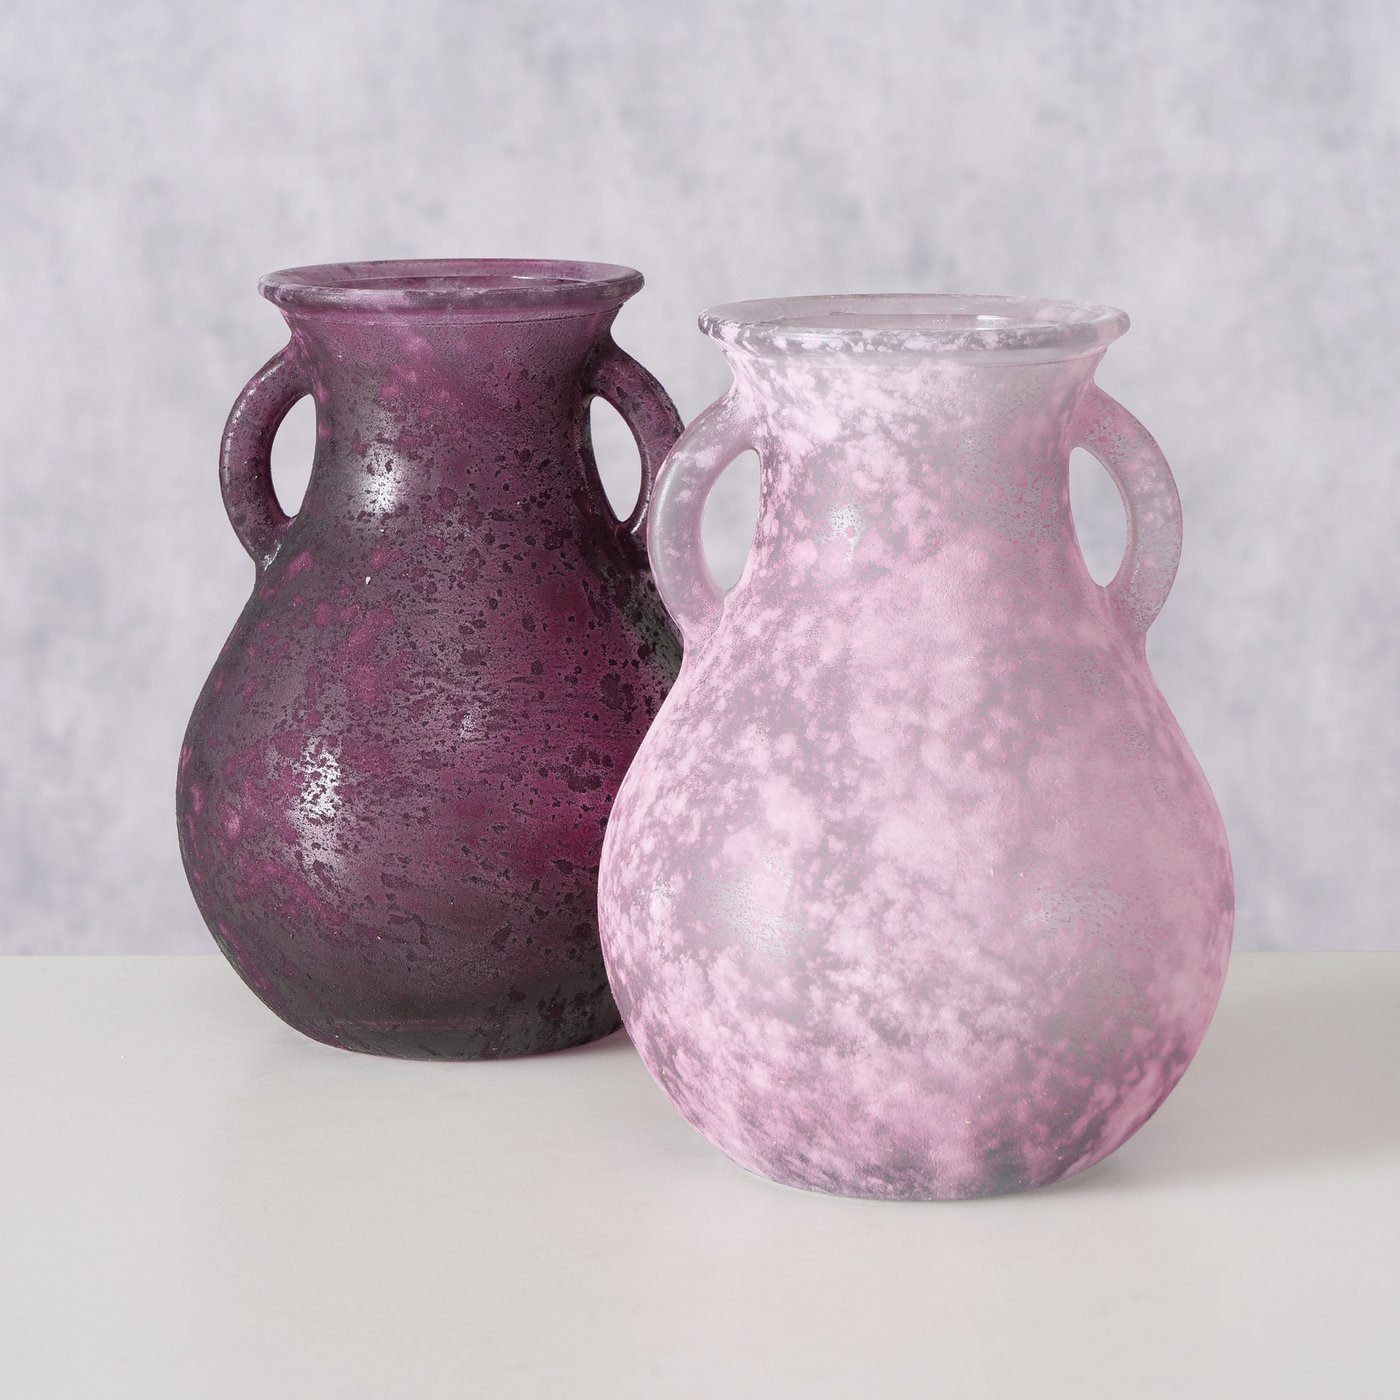 BOLTZE Dekovase 2er Set in aus "Pitcher" Glas Blumenvase lila/rosa, Vase